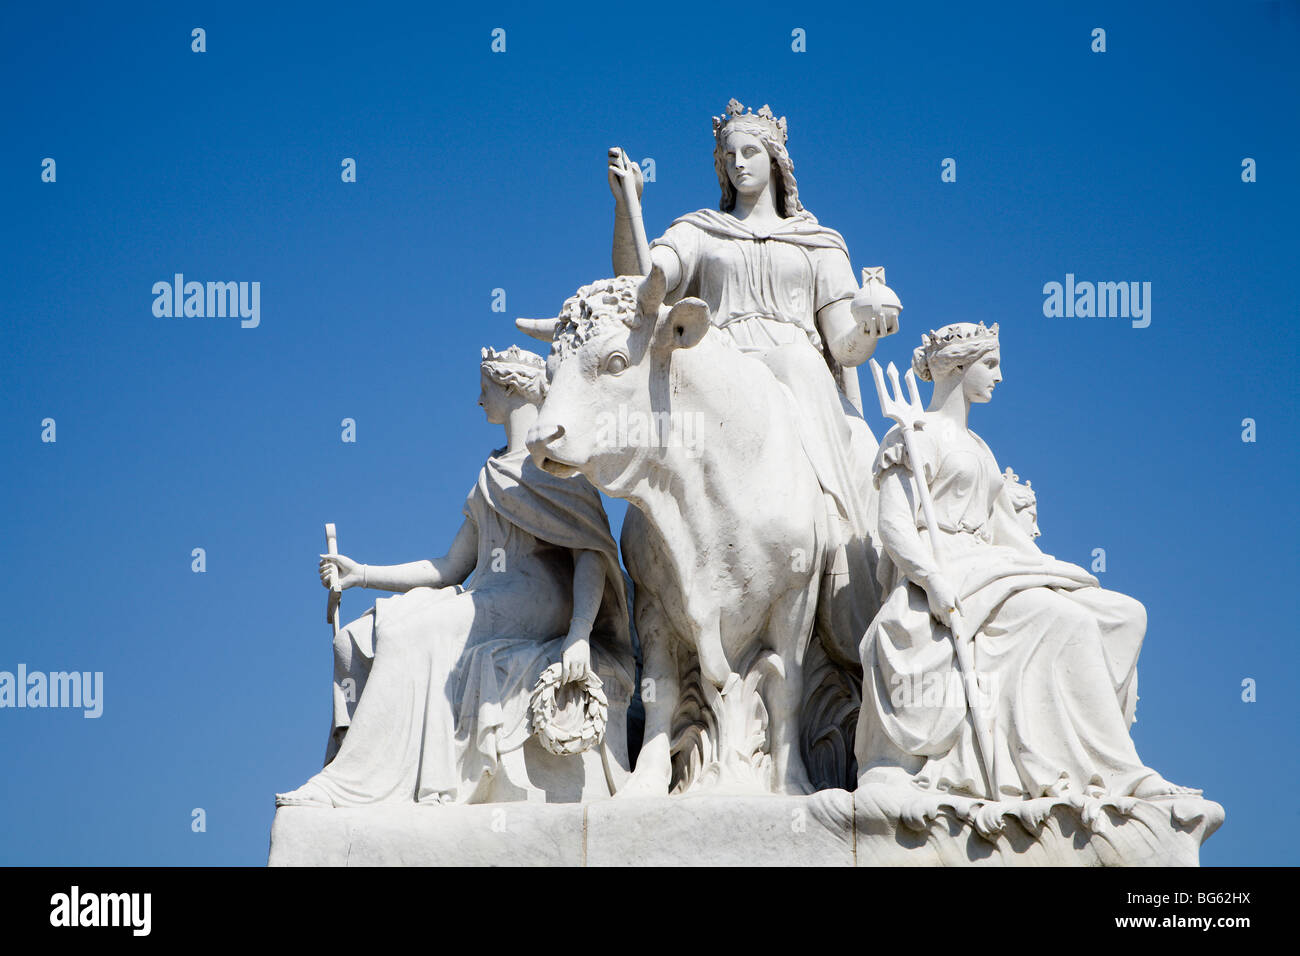 London - Albert memorial - sculpture of Europa Stock Photo